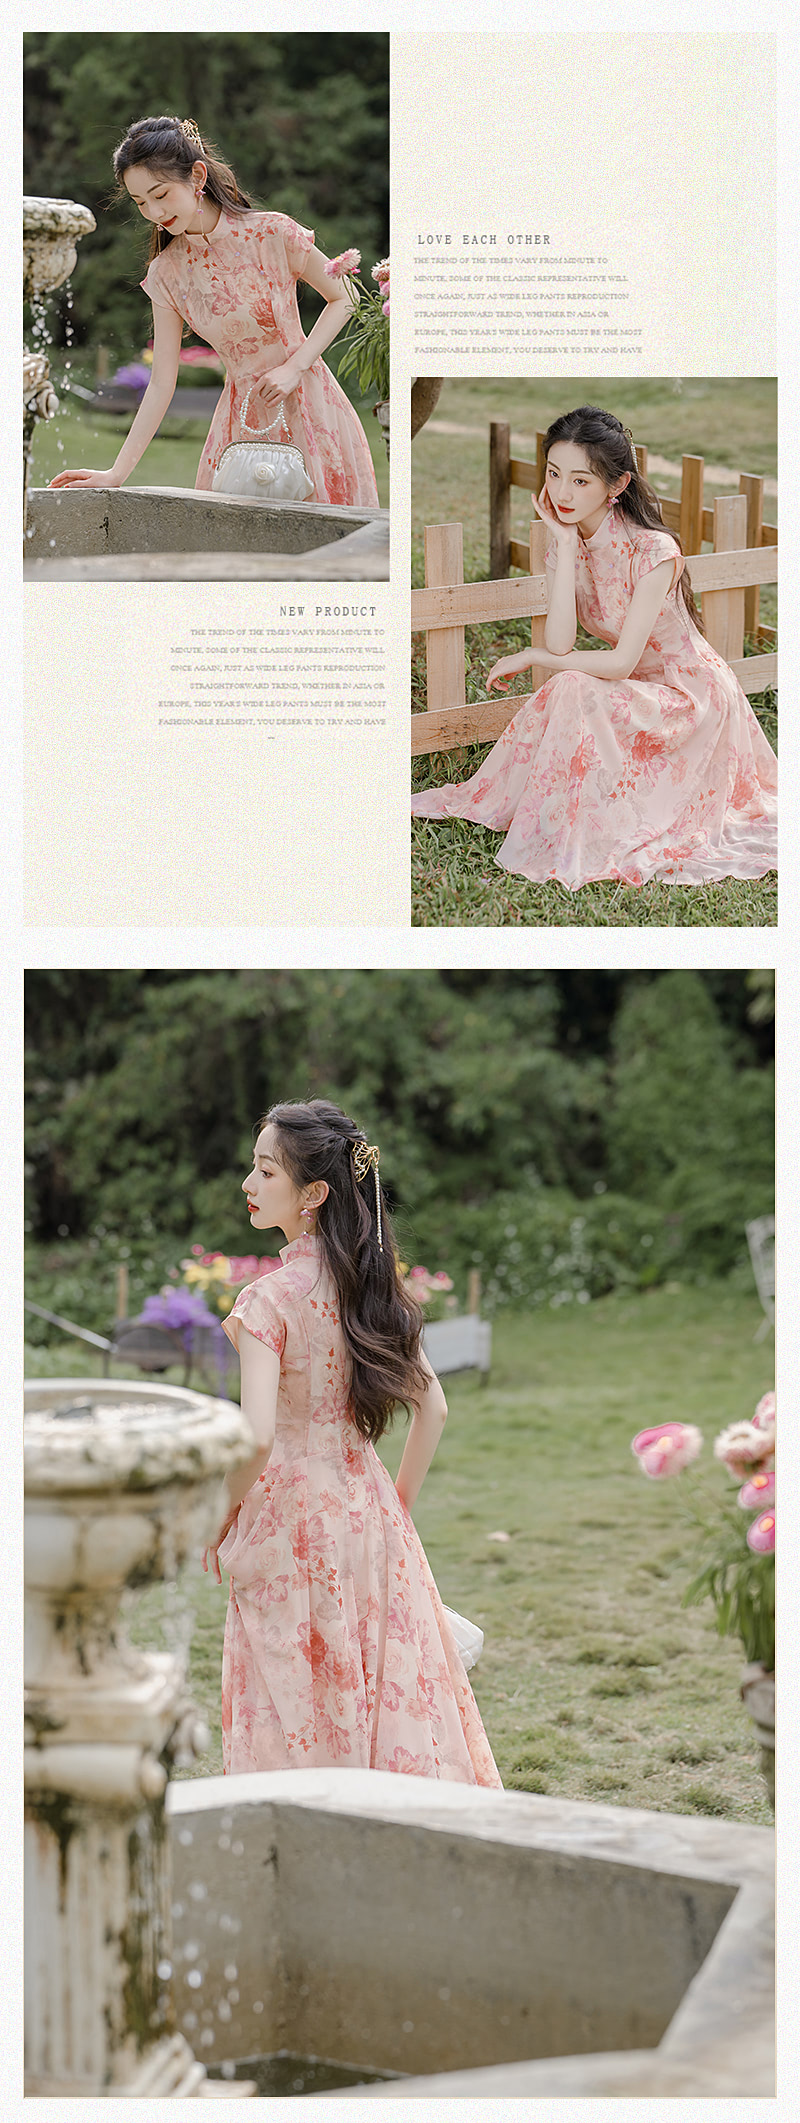 A-Line-Stand-Collar-Chiffon-Pink-Floral-Print-Summer-Maxi-Dress14